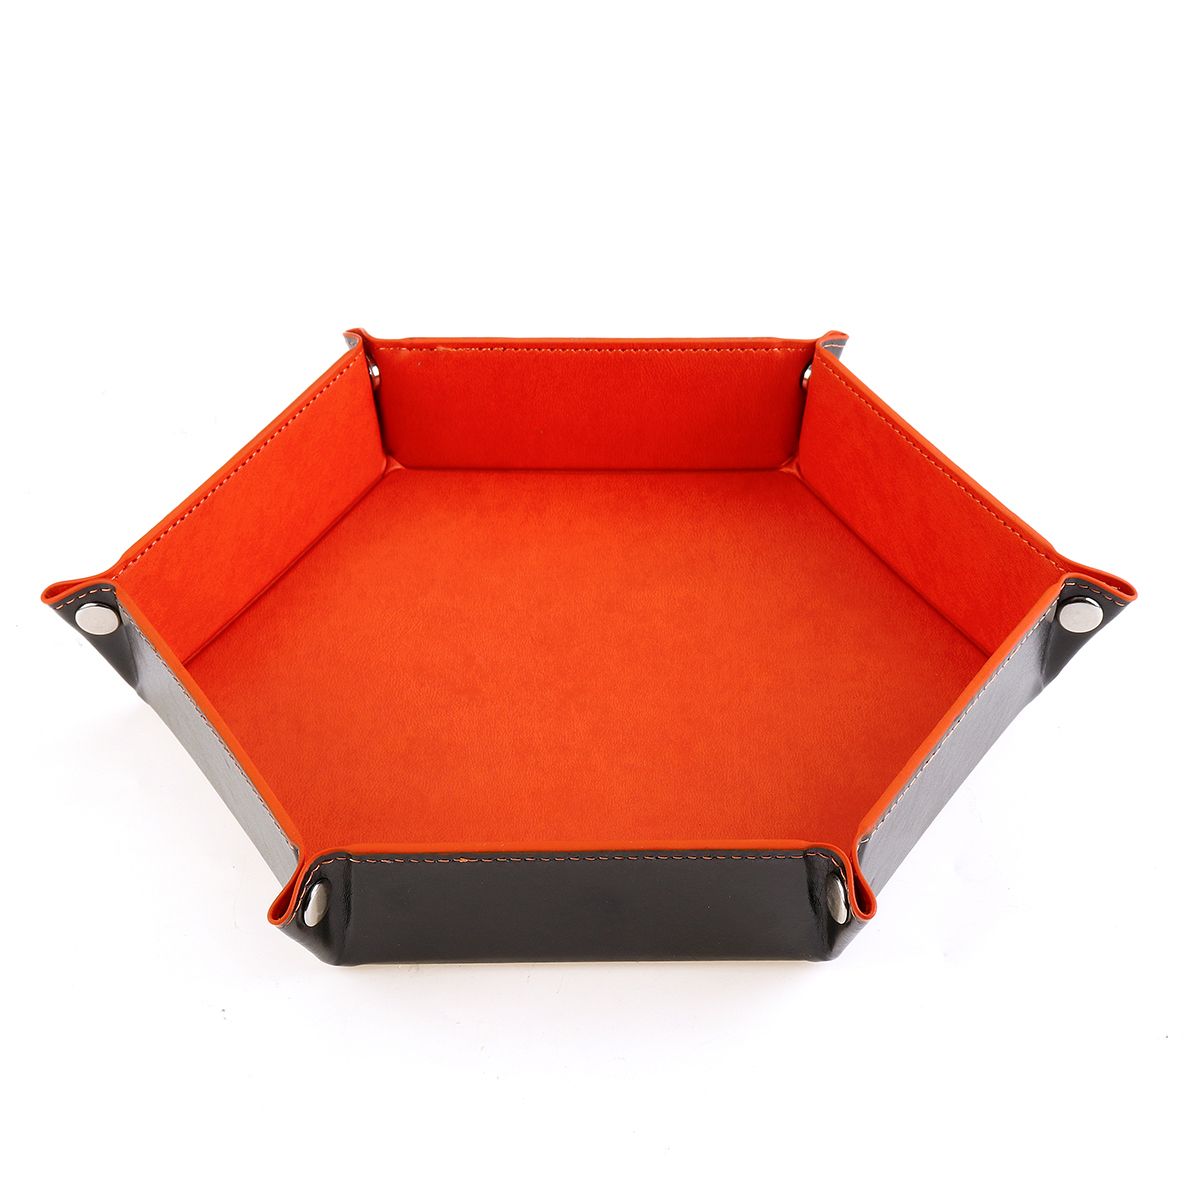 QuadrilateralHexagon-Board-PU-Leather-Dice-Plate-Game-Board-Gift-Storage-Tray-Muiti-sided-Device-Pol-1640980